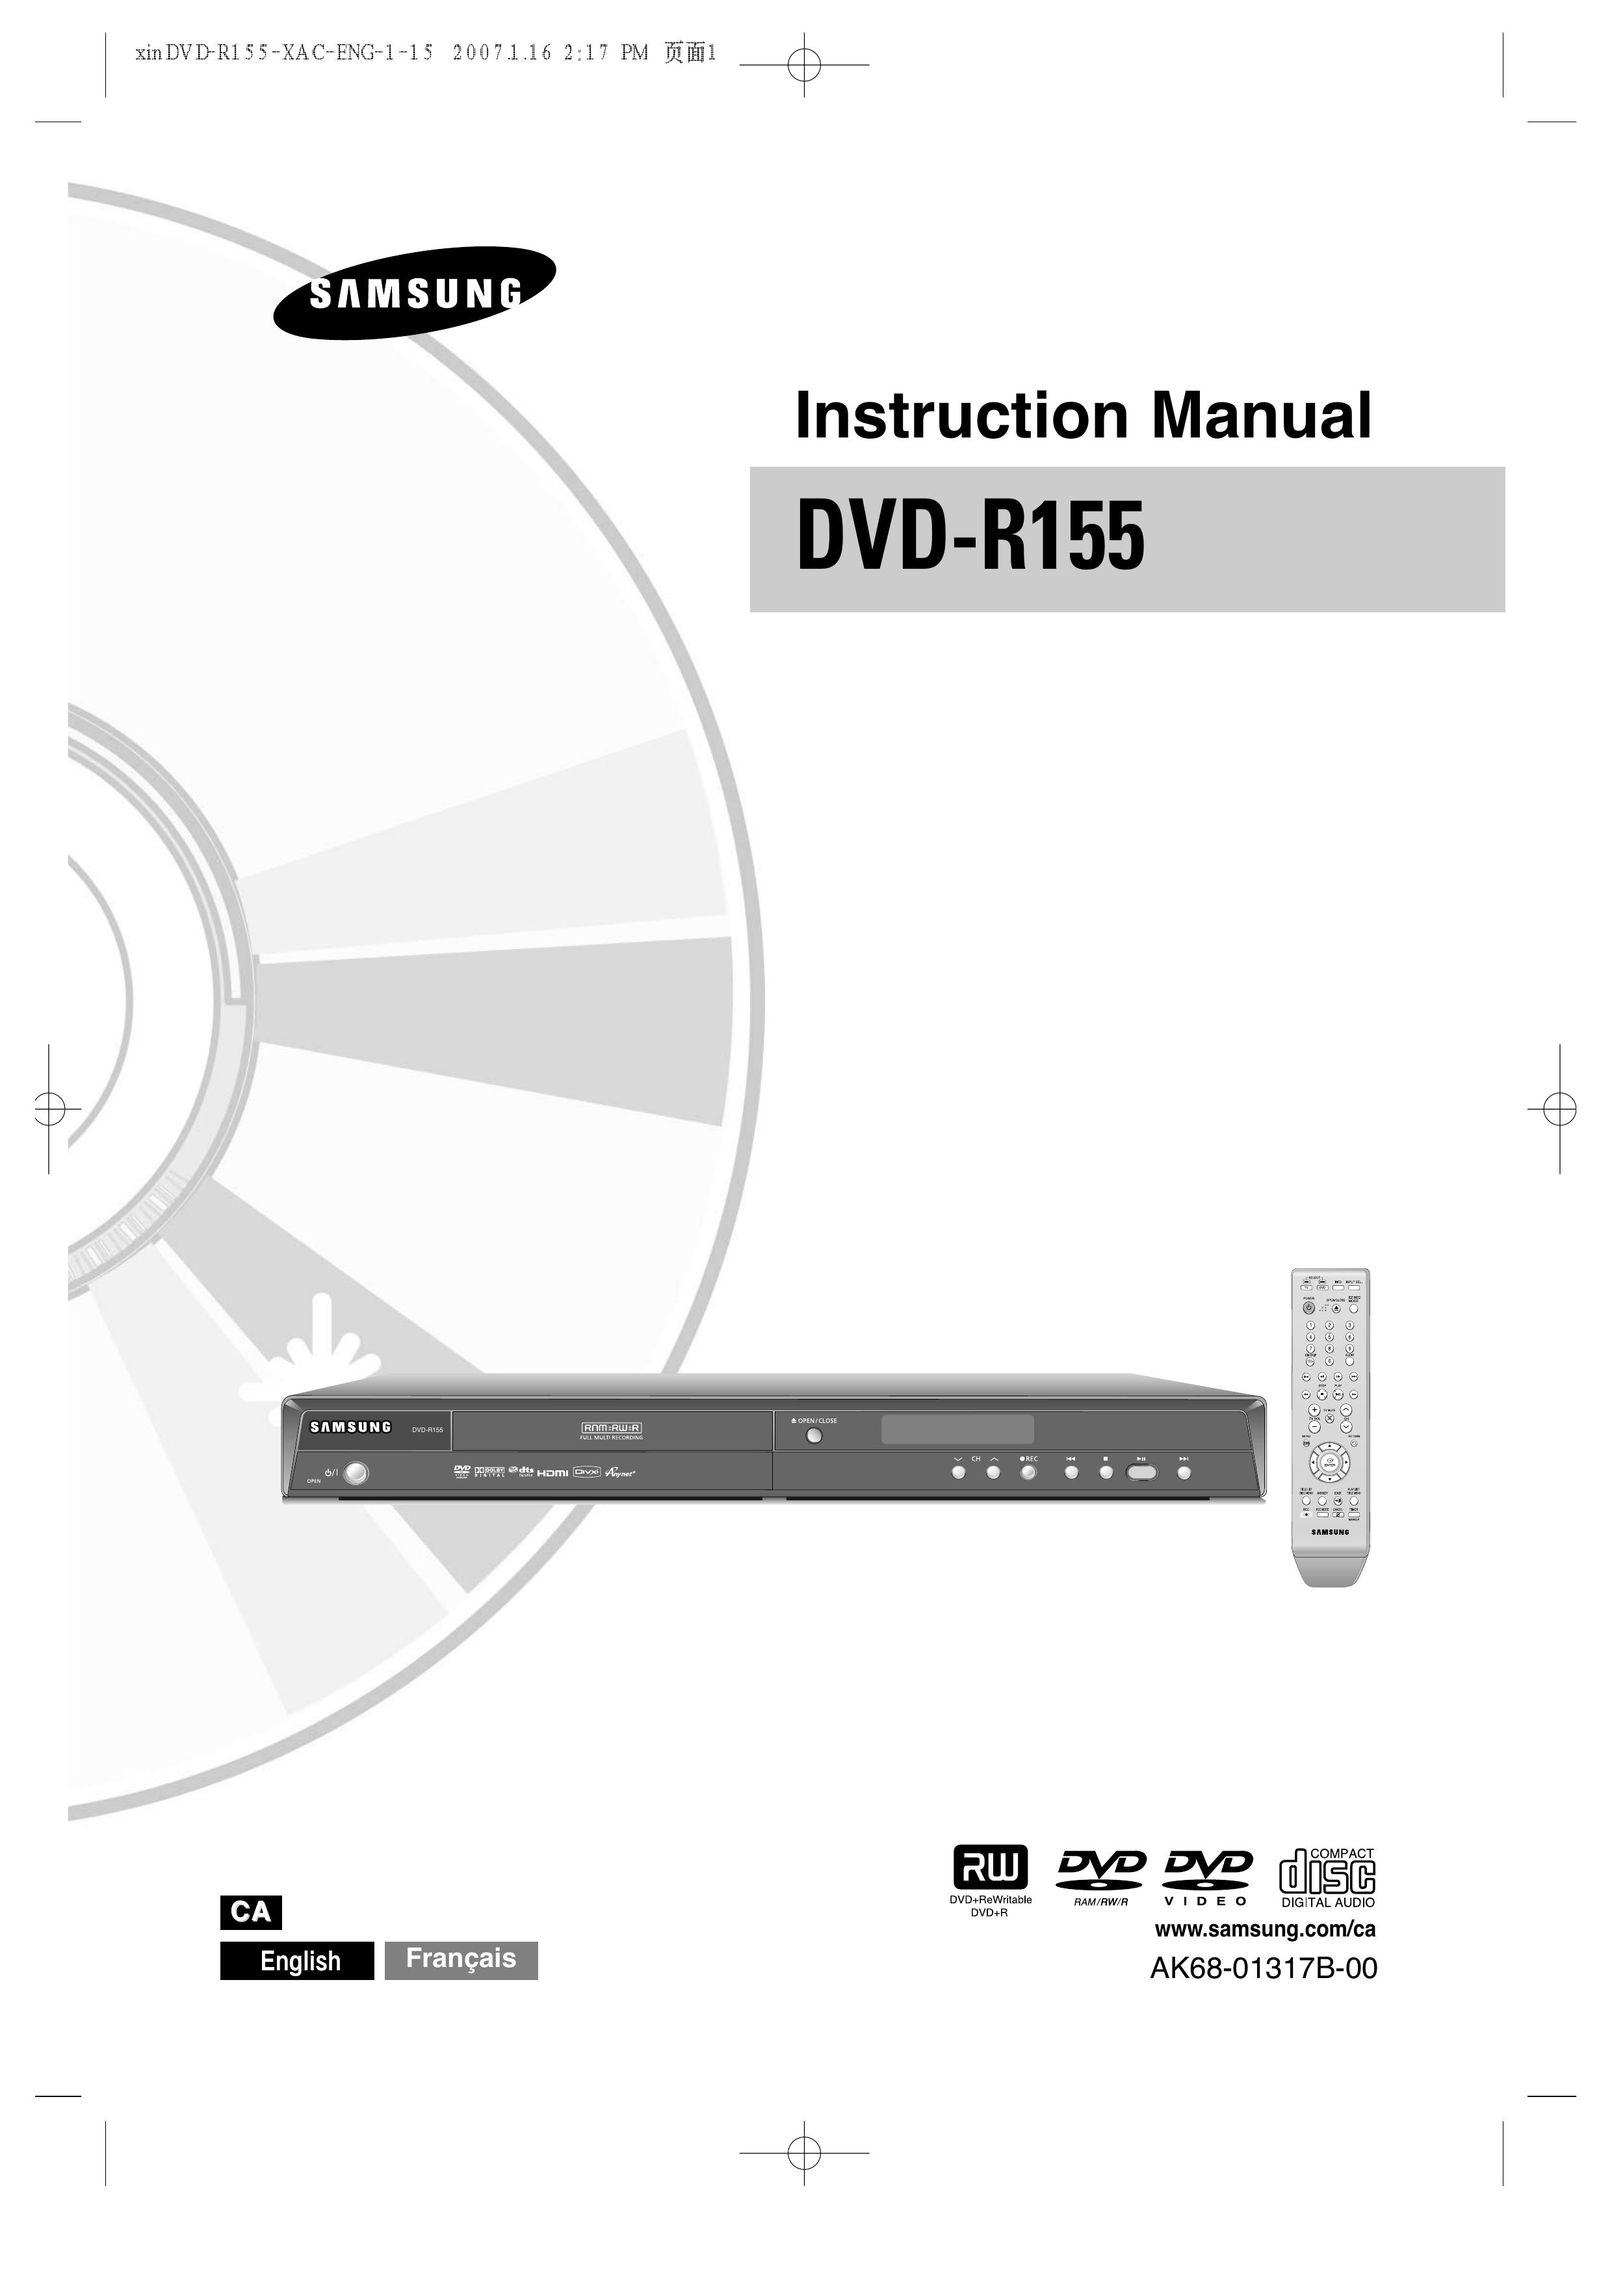 Samsung DVD-R155 DVD Recorder User Manual